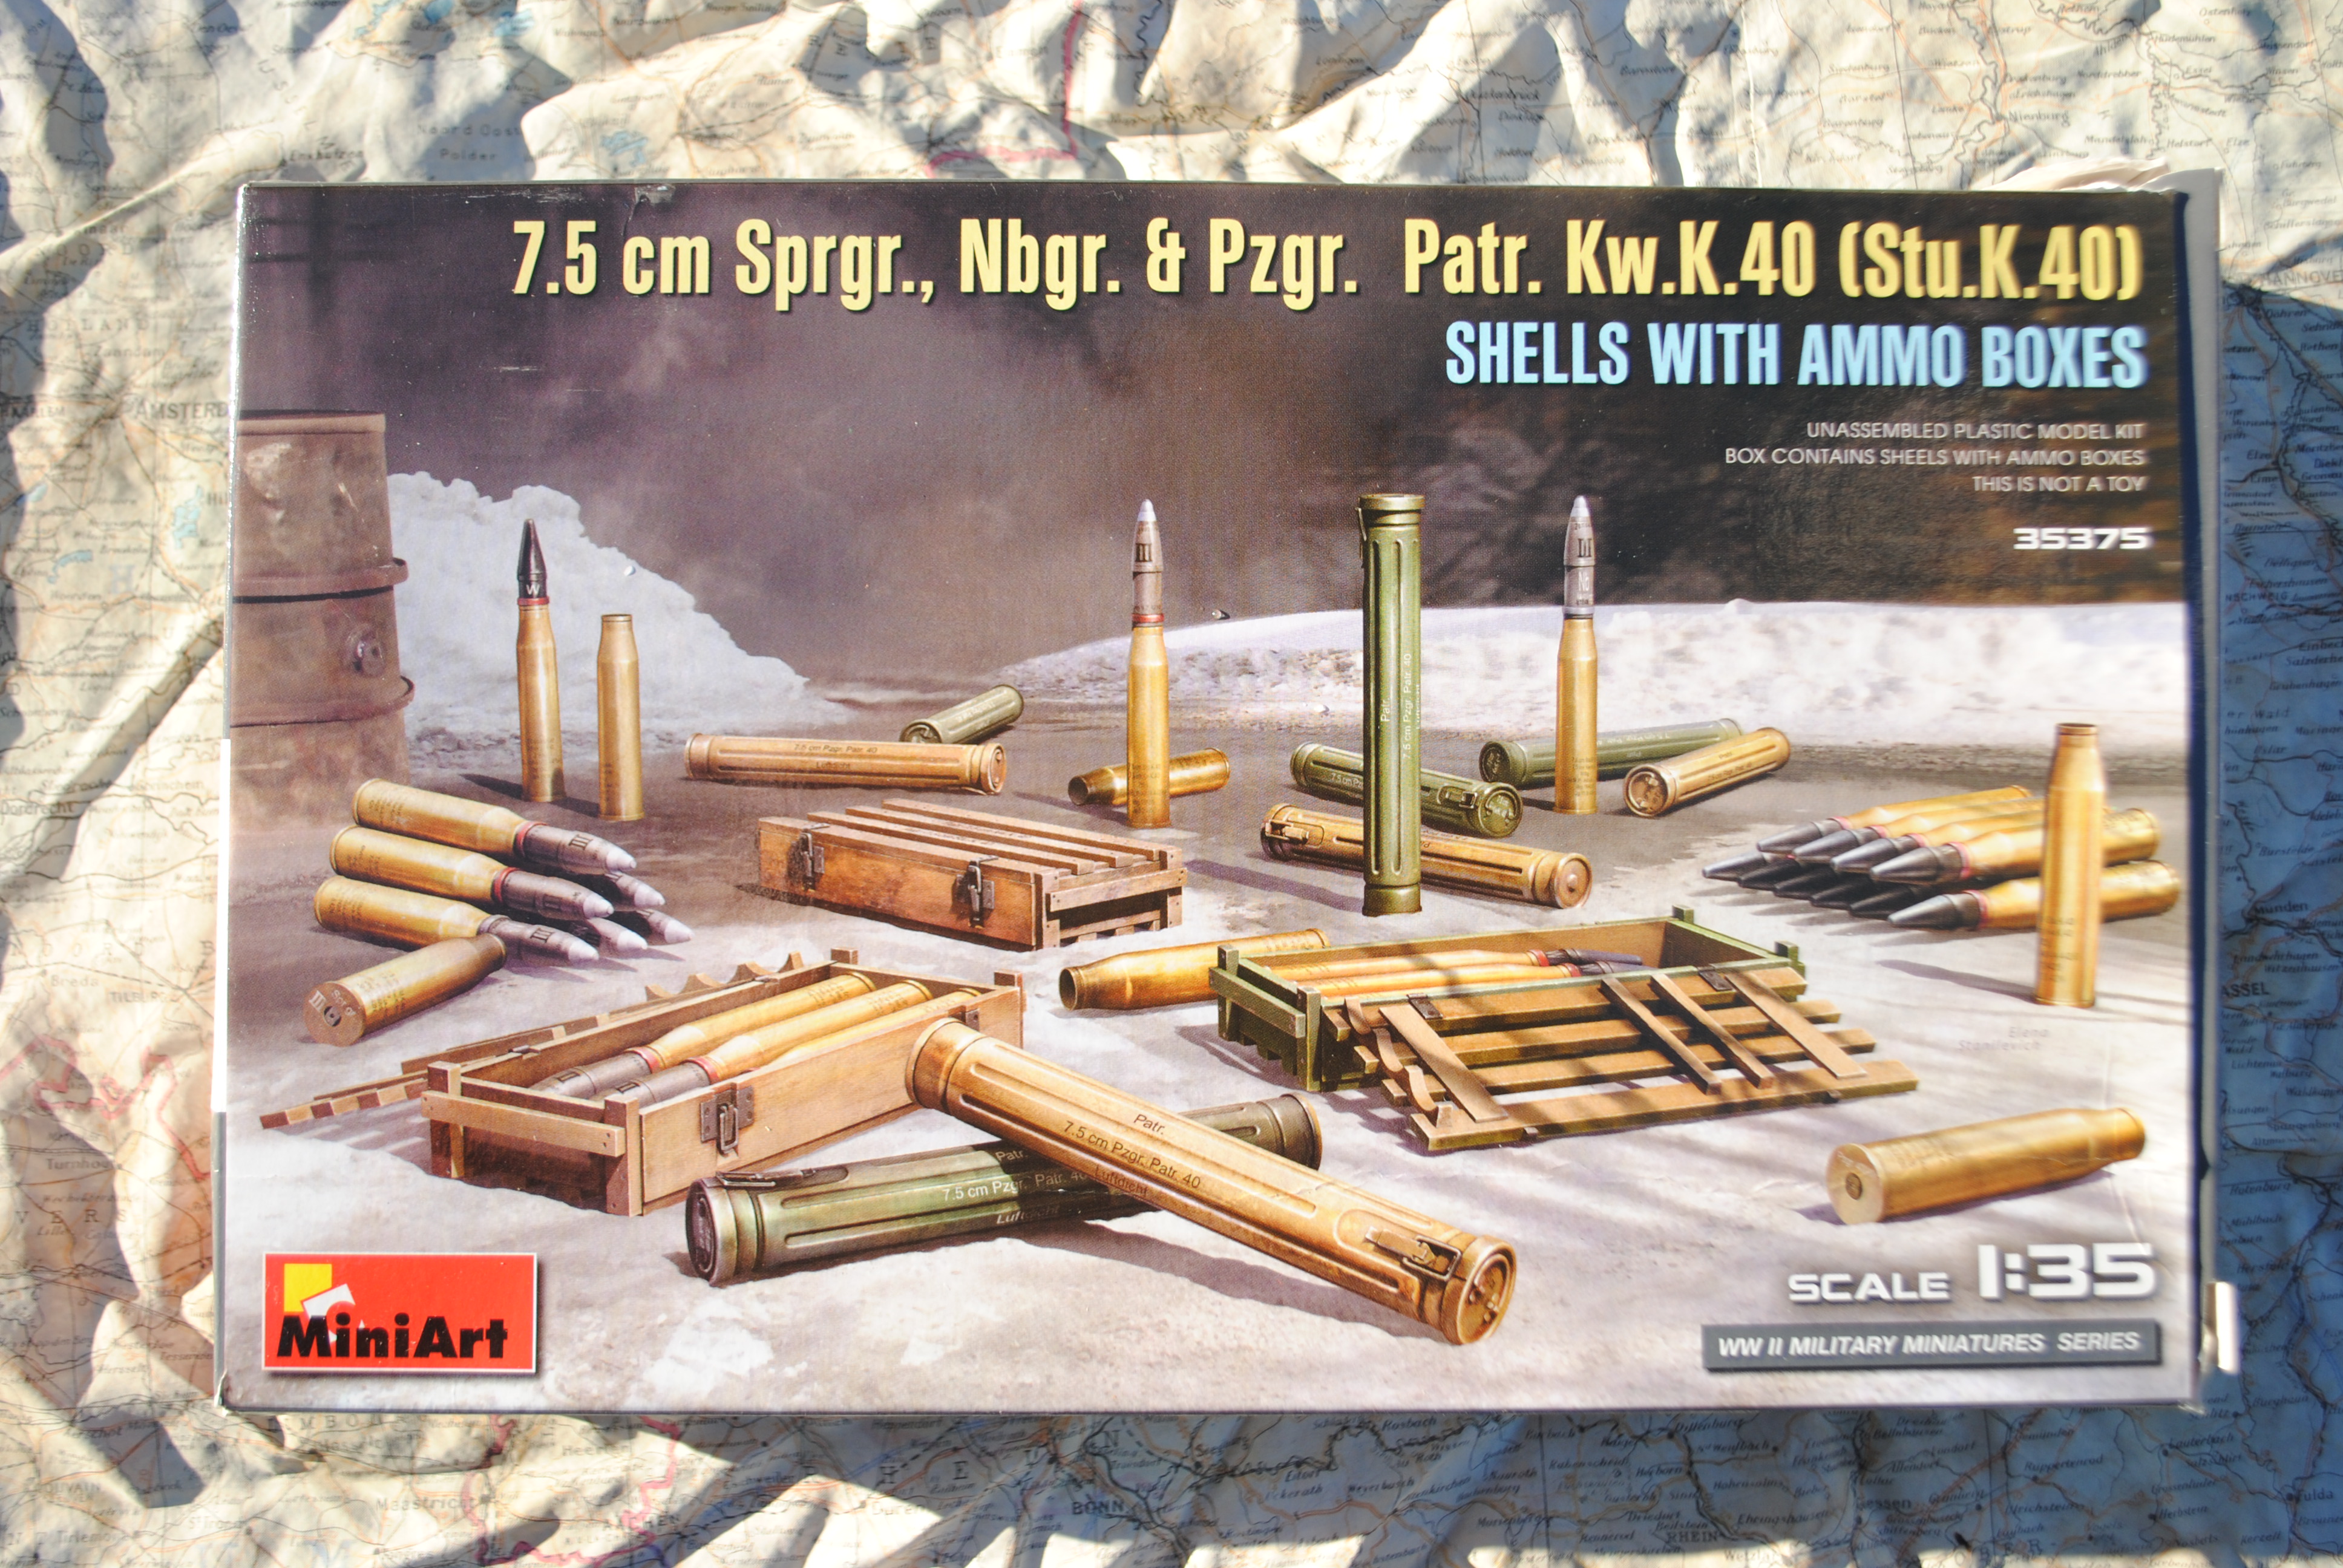 Mini Art 35375 7.5cm Sprgr. Nbgr. & Pzgr. Patr. Kw.K.40 (Stu.K.40) Shells with Ammo Boxes